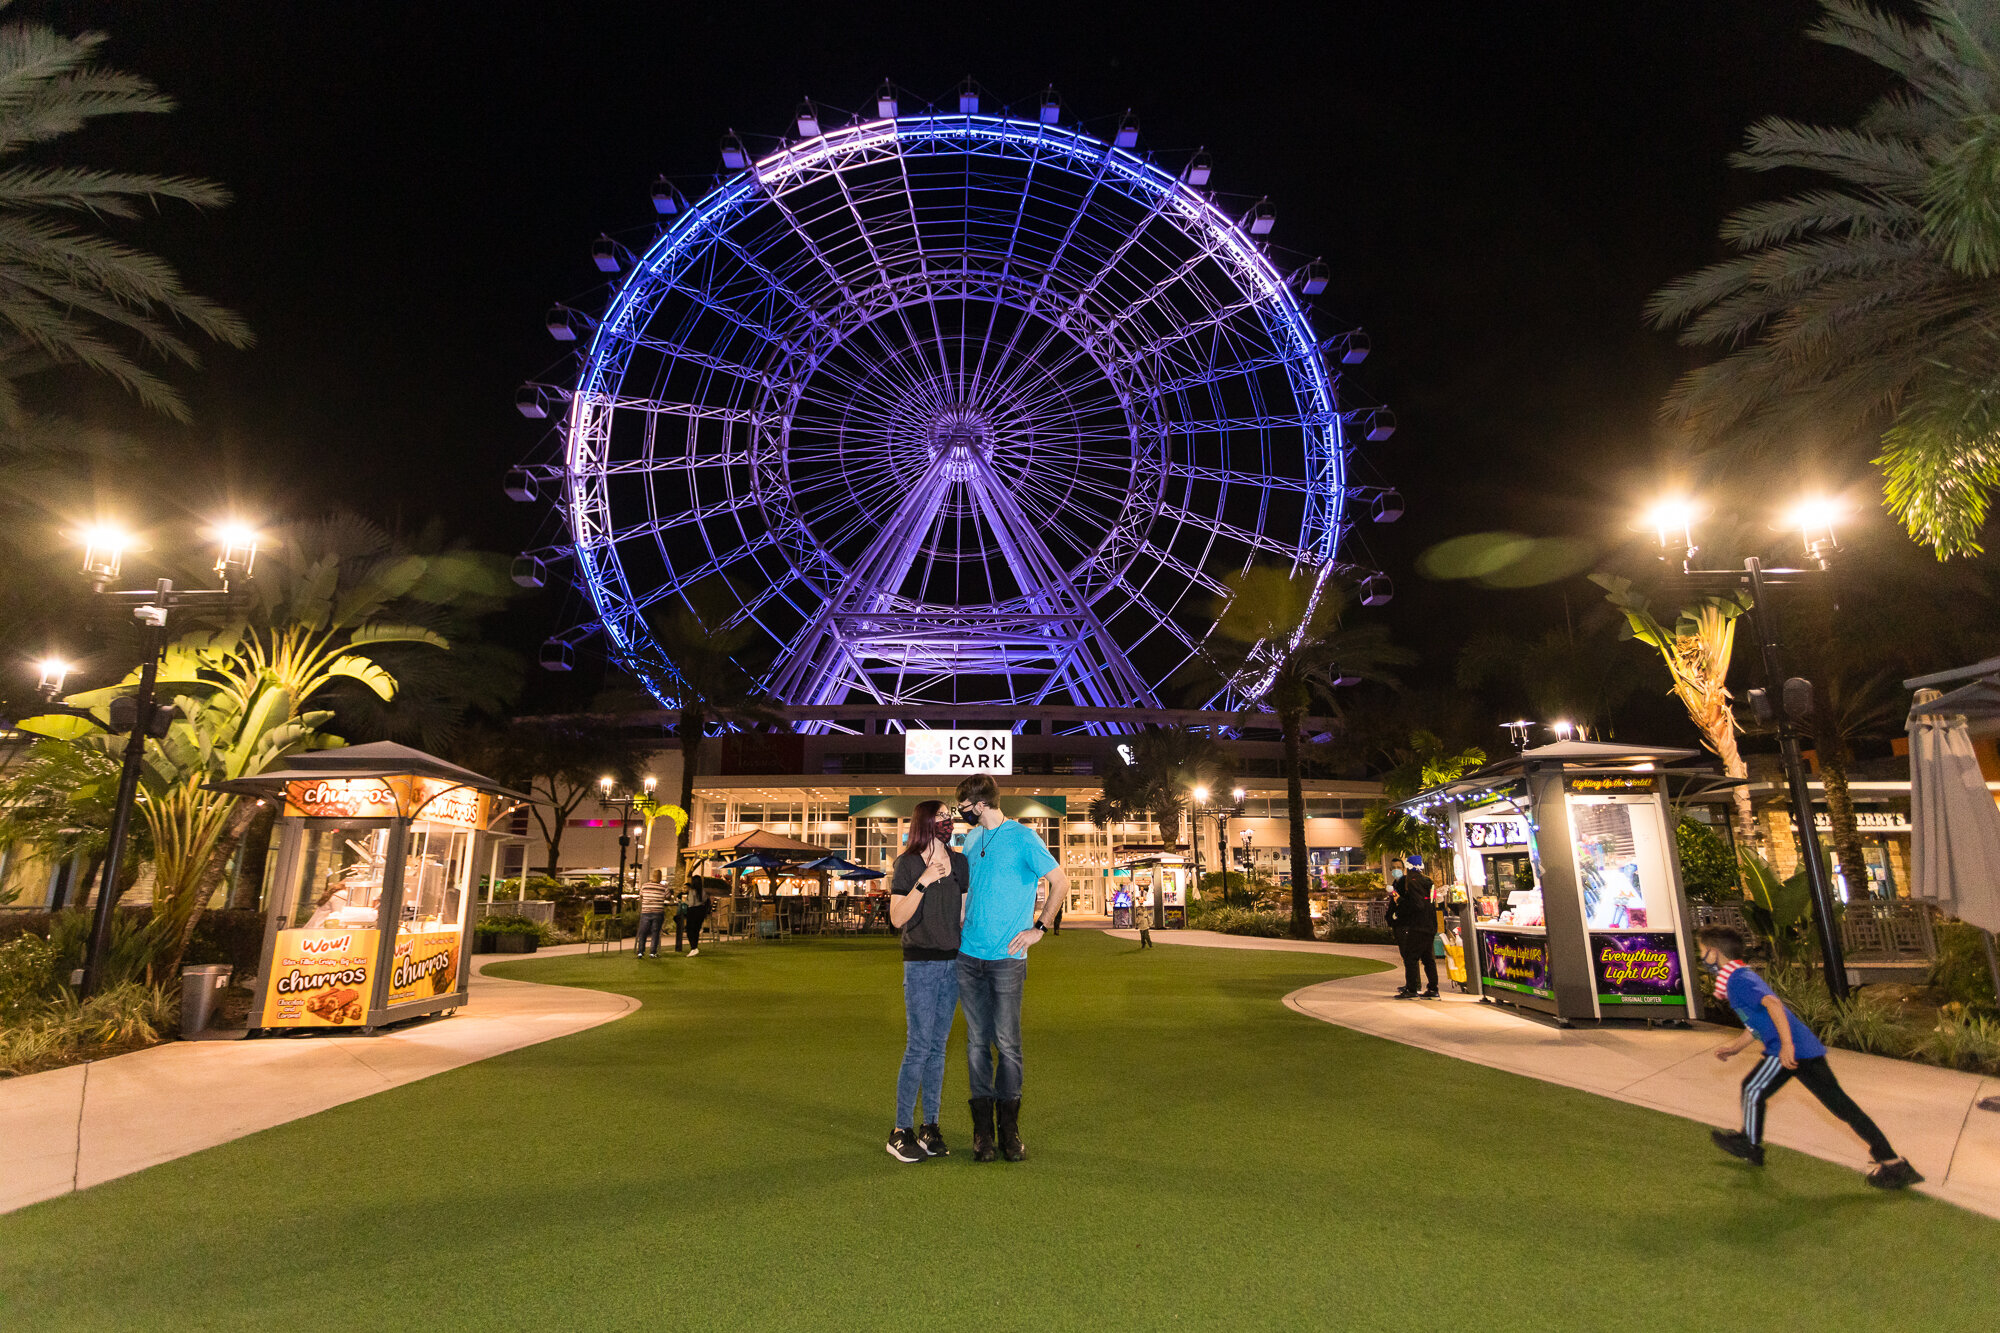  Preston and Rebecca's The Wheel at ICON Park Orlando, Florida Marriage Proposal 